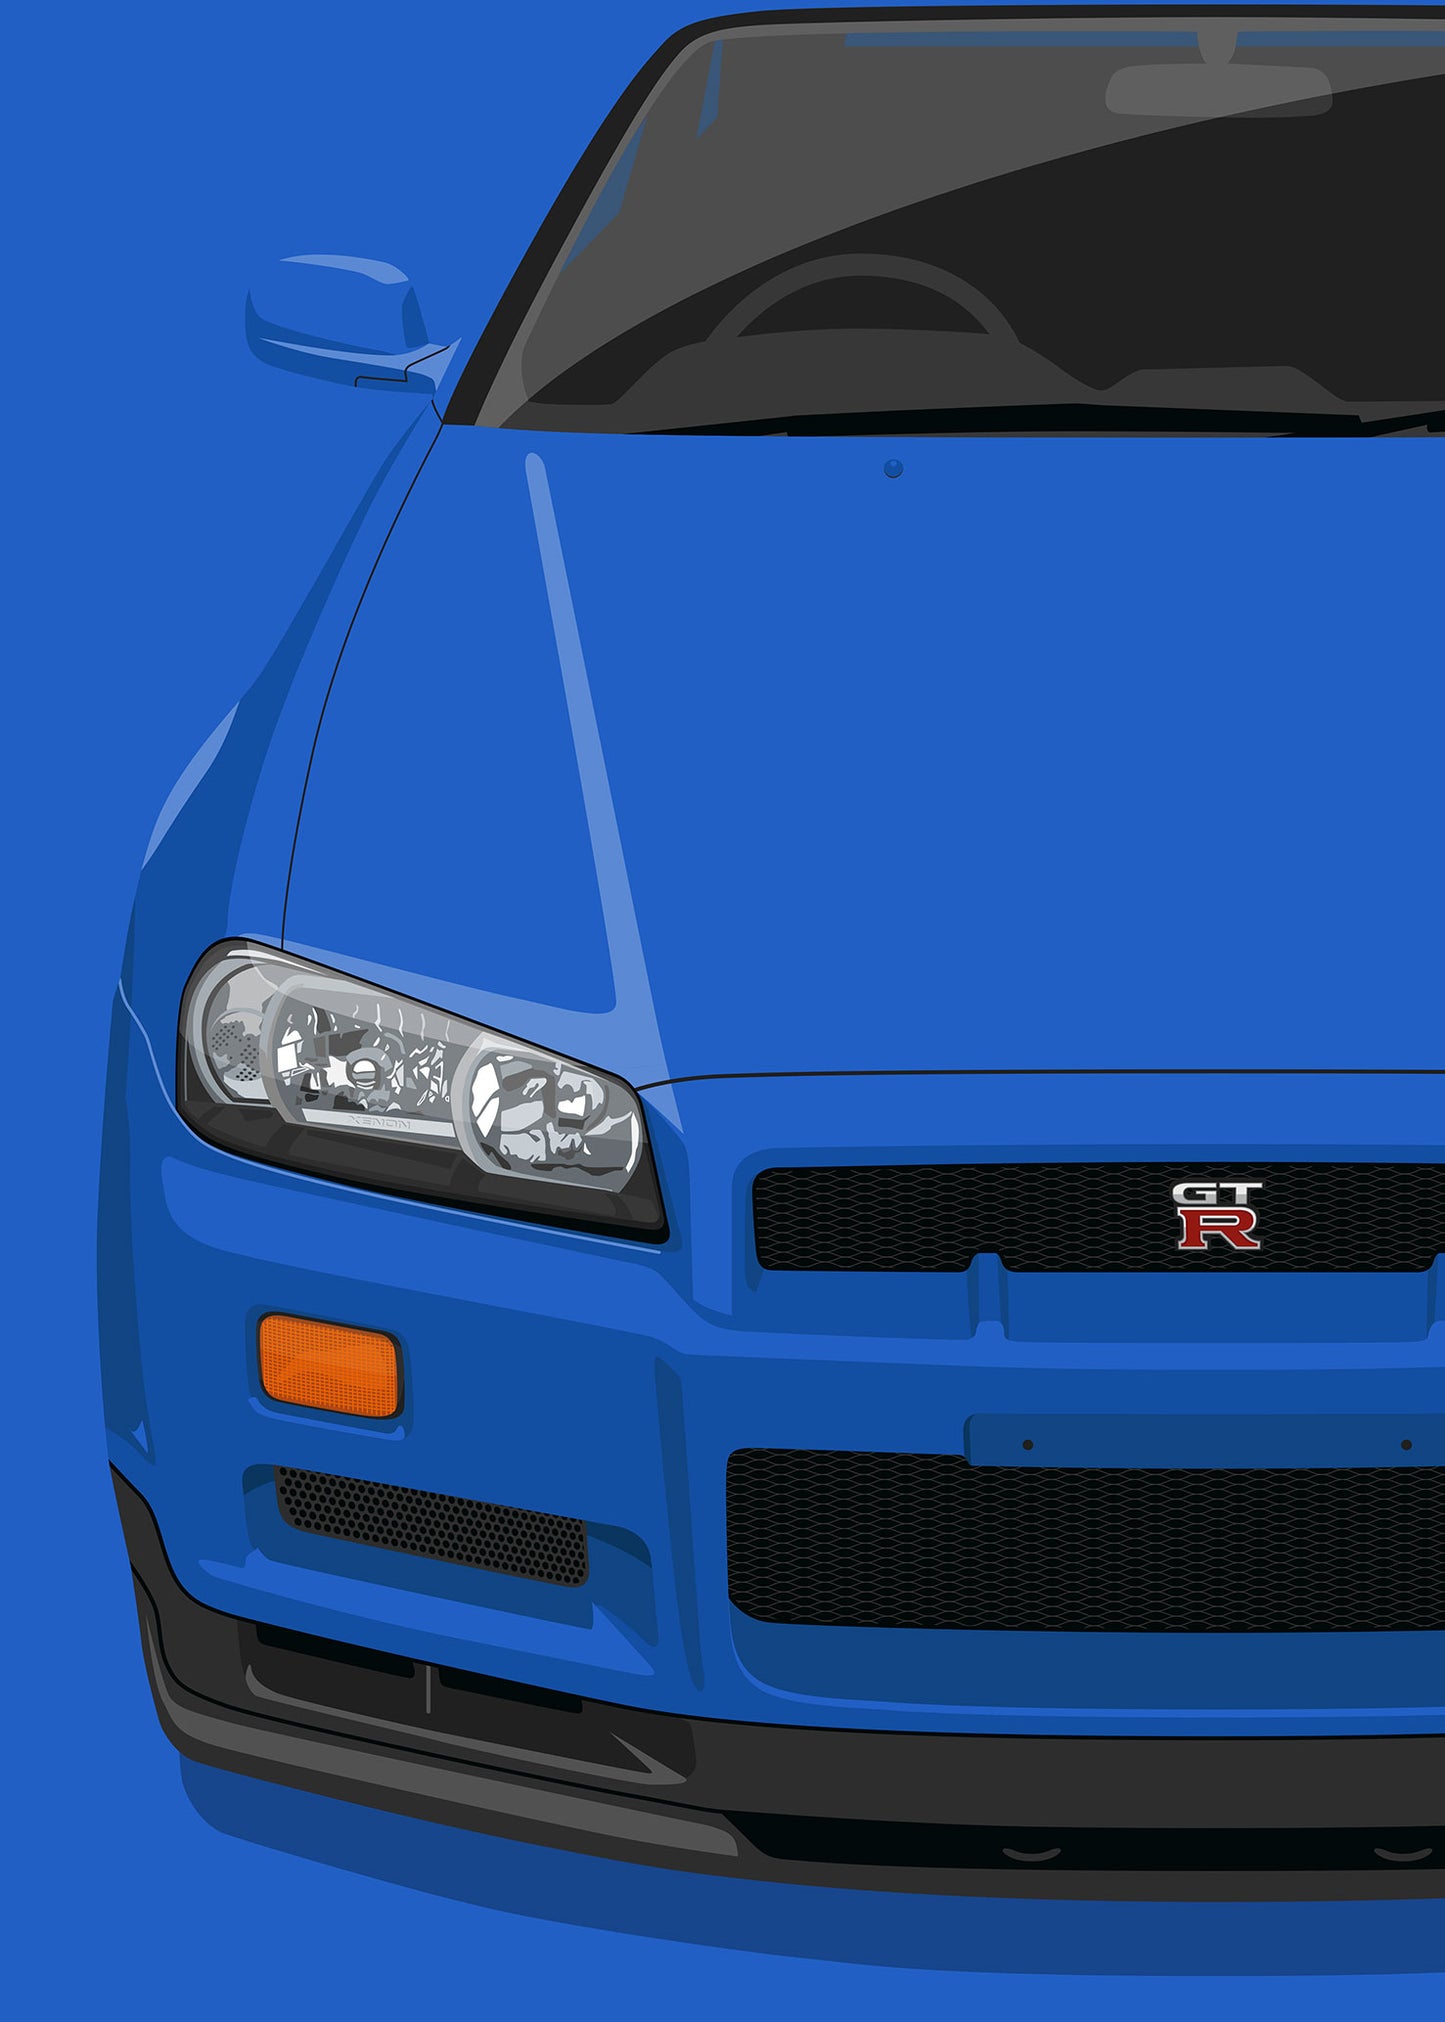 1999 Nissan Skyline R34 GTR V-Spec - Bayside Blue - poster print